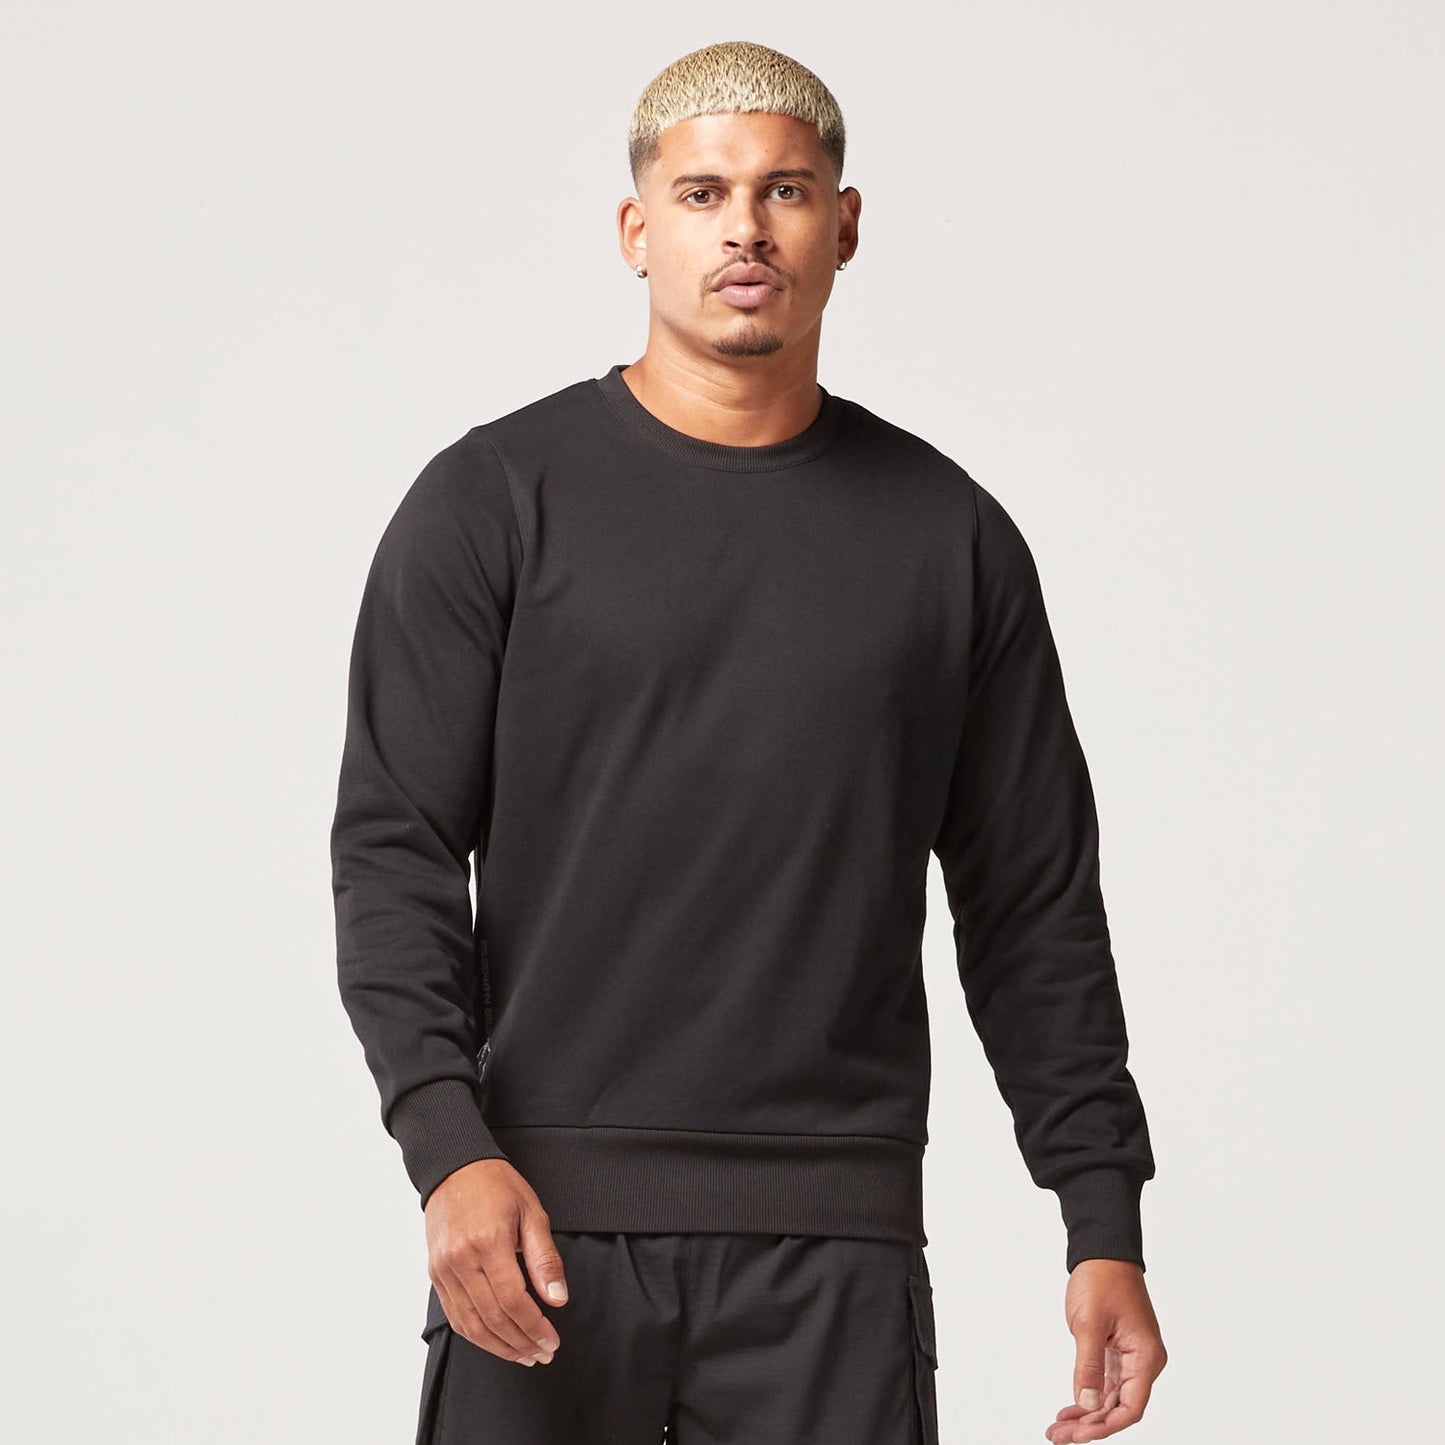 squatwolf-gym-wear-code-crew-sweatshirt-black-workout-shirts-for-men